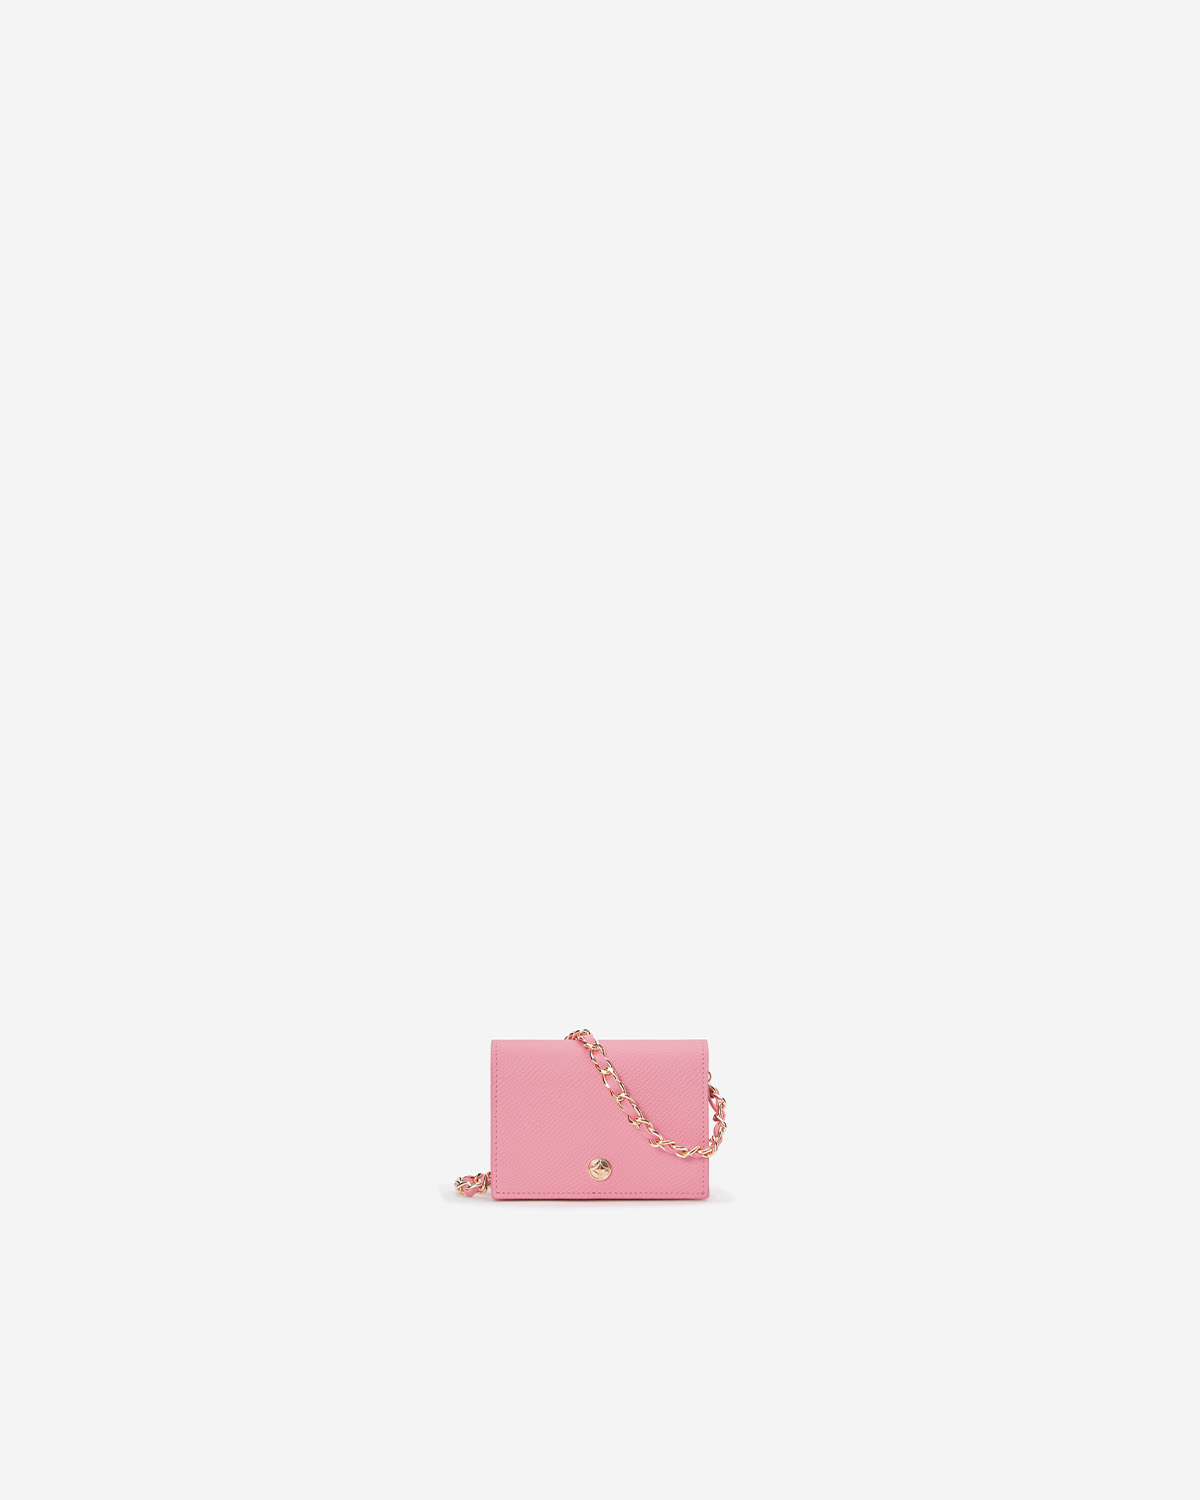 VERA Emily Flap Wallet with Leather Braided Gold Chain in Creative Pink กระเป๋าสตางค์หนังแท้ แบบเปิดฝา พร้อมสายโซ่สีทองร้อยหนัง สีชมพู